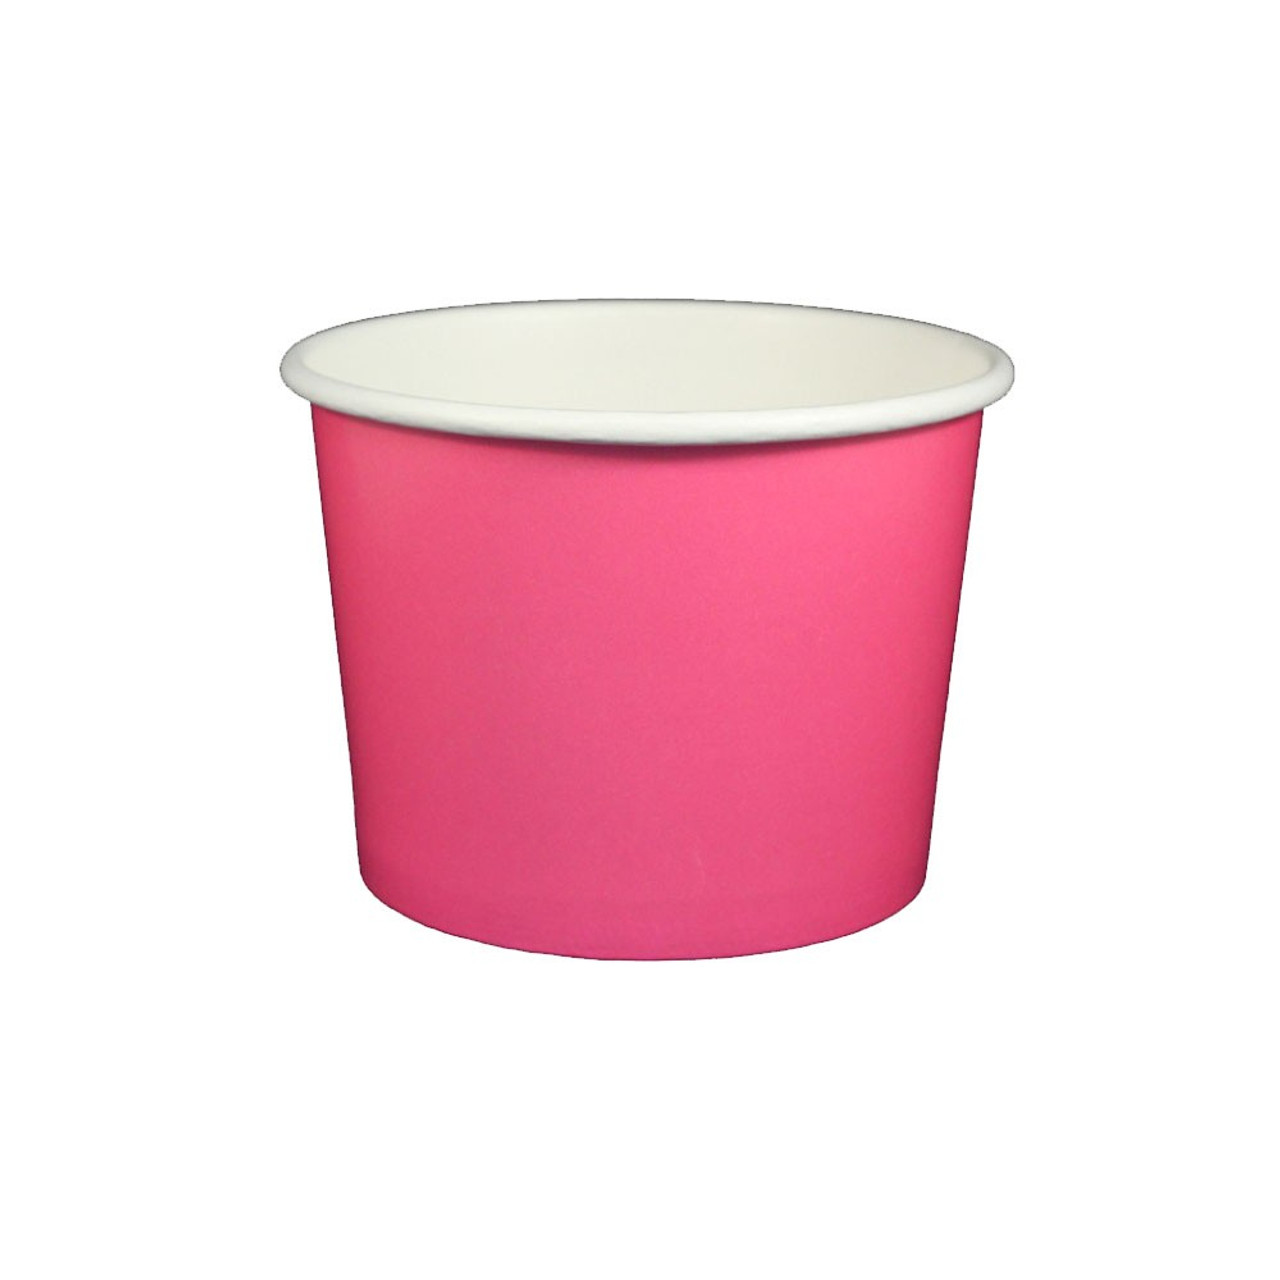 Ice Cream Pint Container Reusable Juice Storage Cups Yogurt